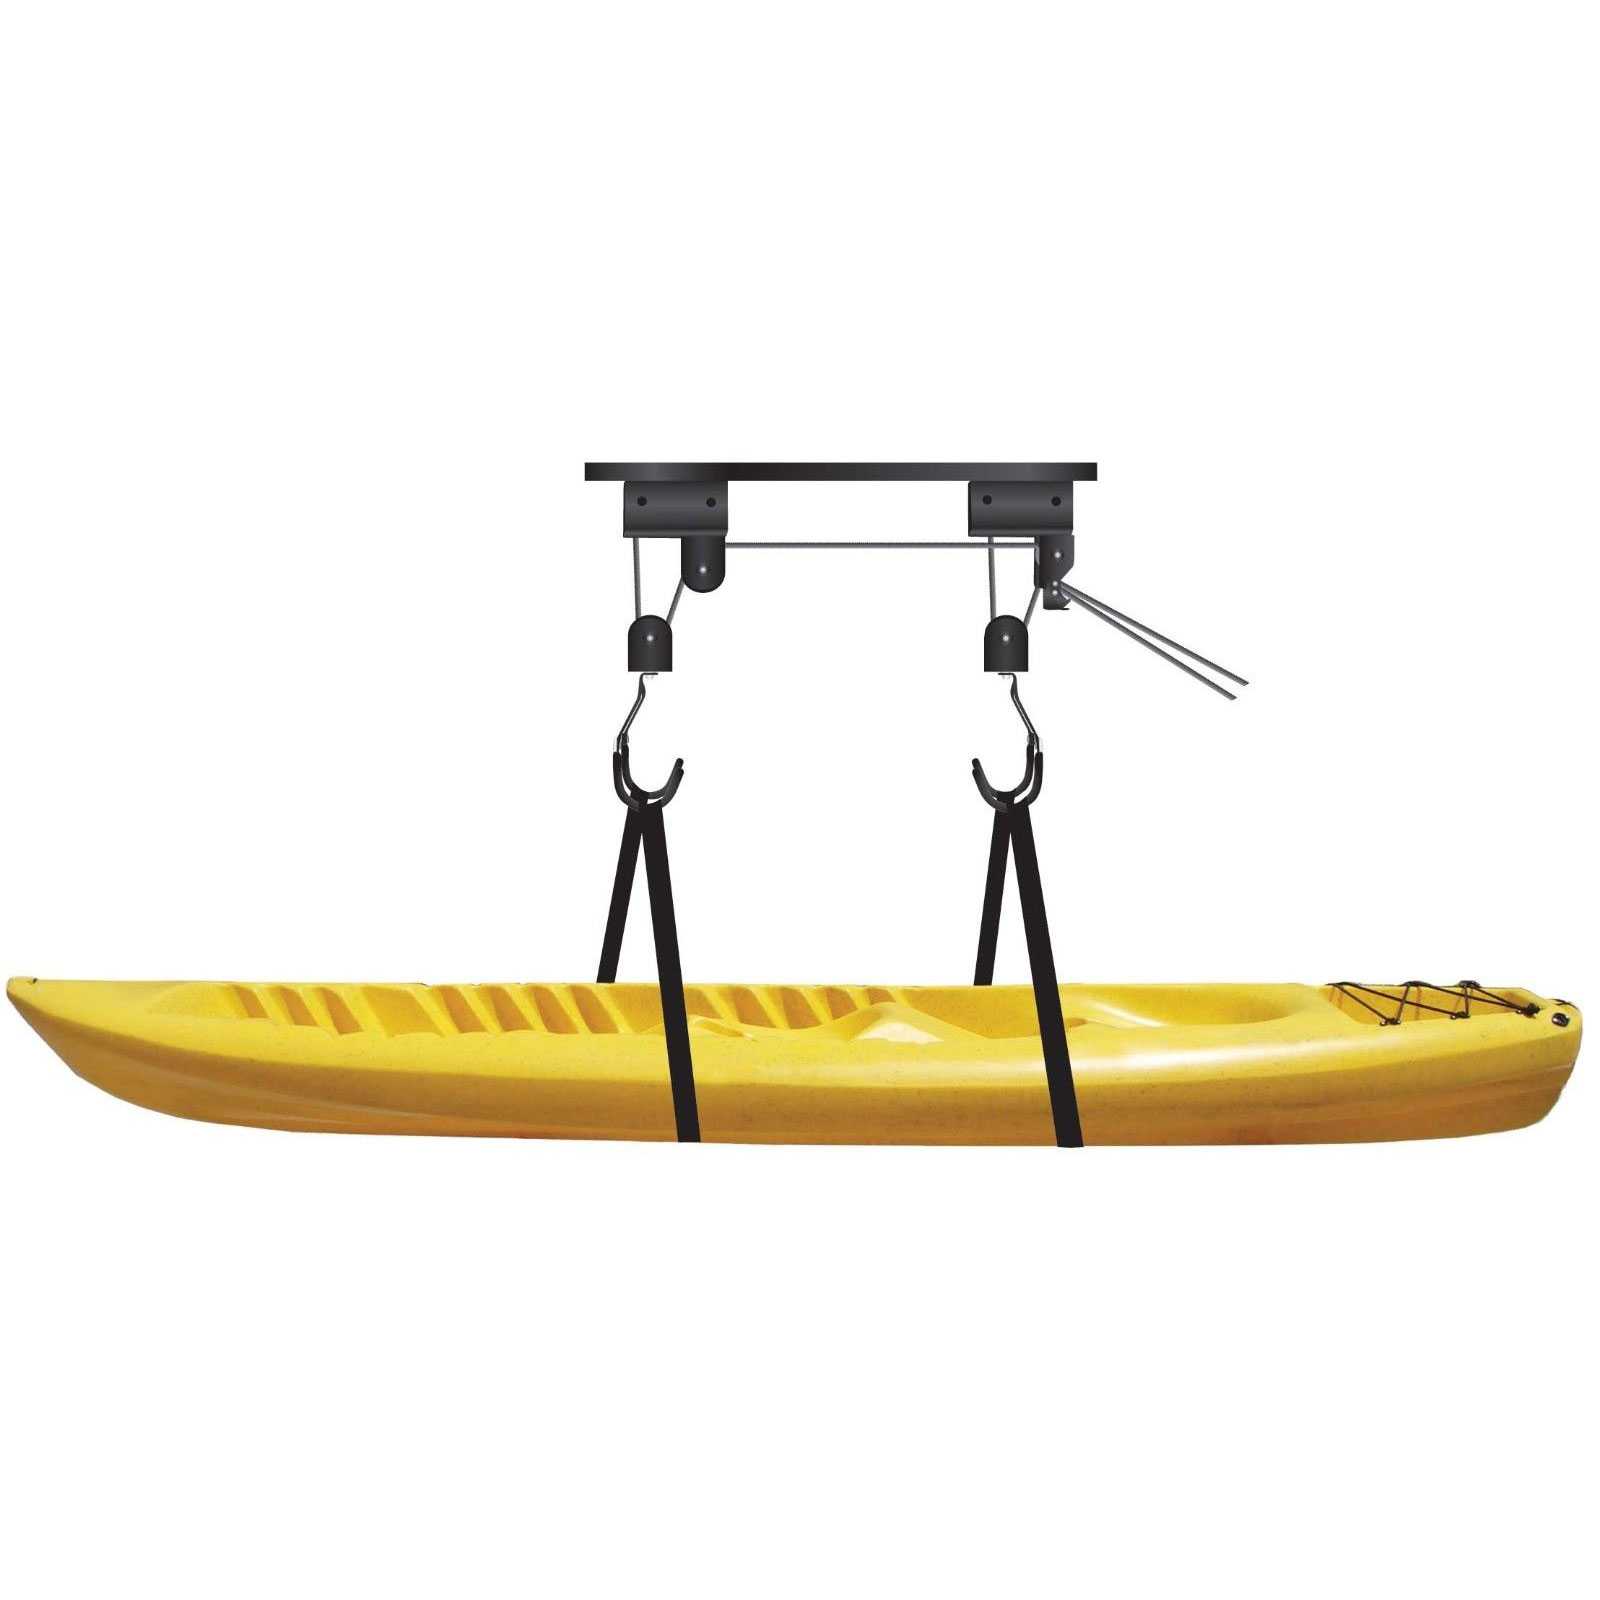 1004 Kayak Hoist Lift Garage Storage Canoe Hoists 125 lb Capacity Two 2 Pack 